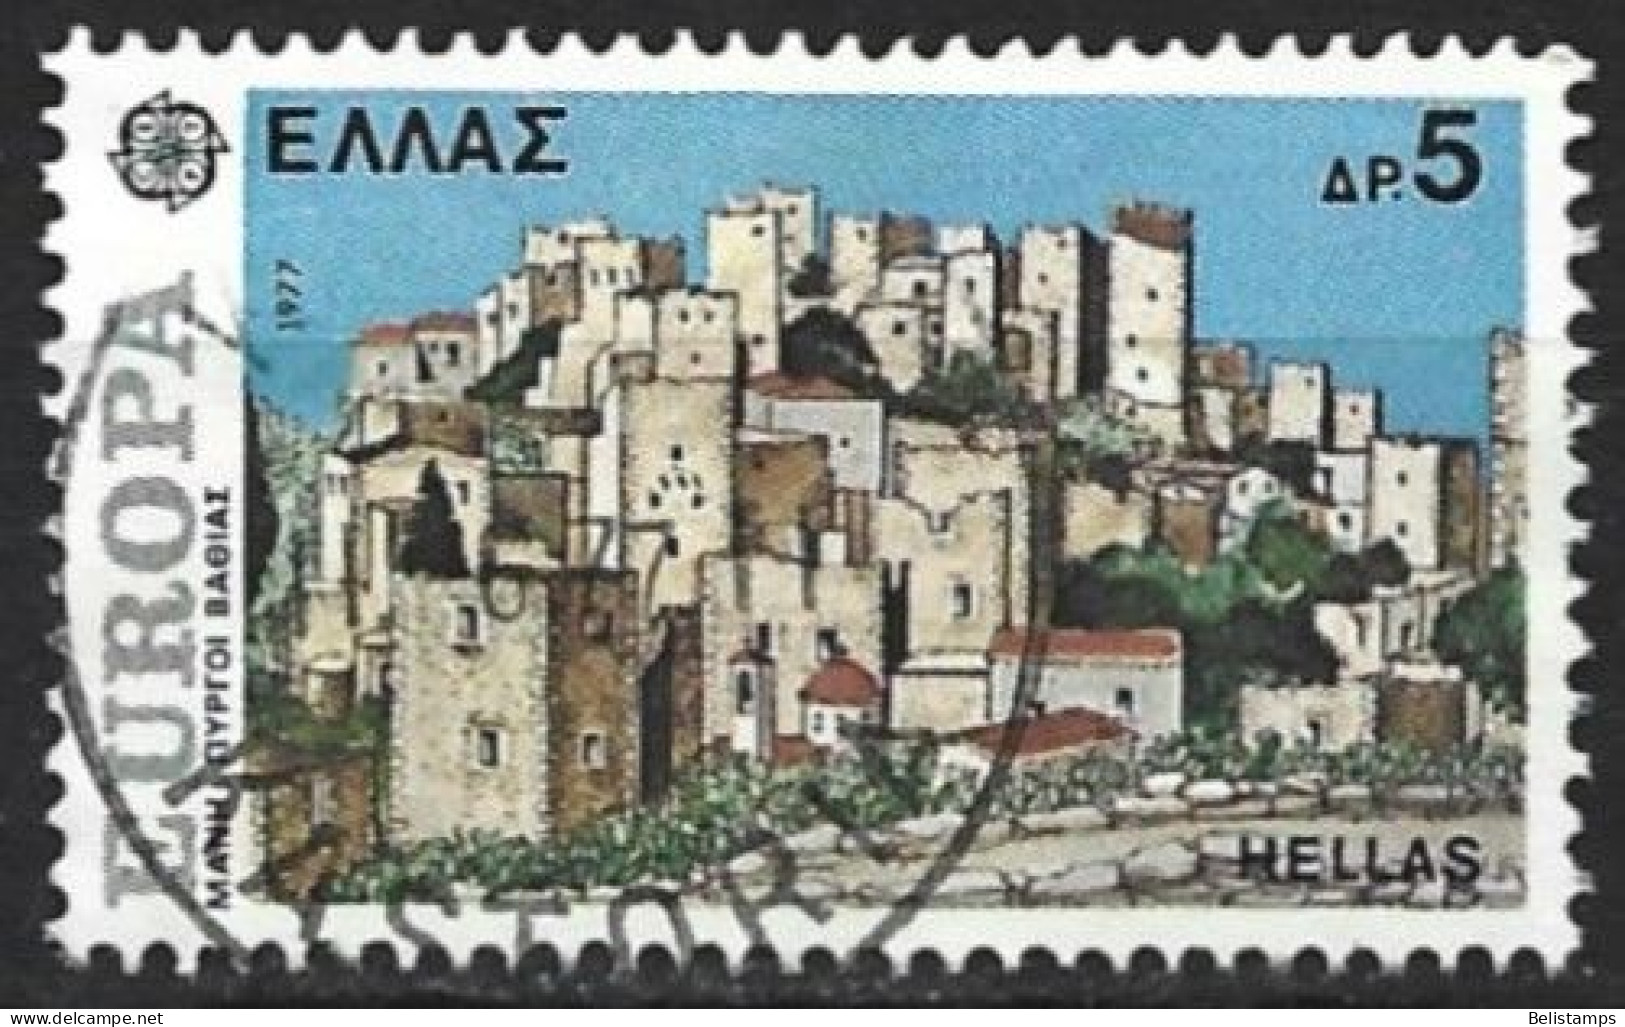 Greece 1977. Scott #1205 (U) Europa, Mani Castle, Vathia - Usados